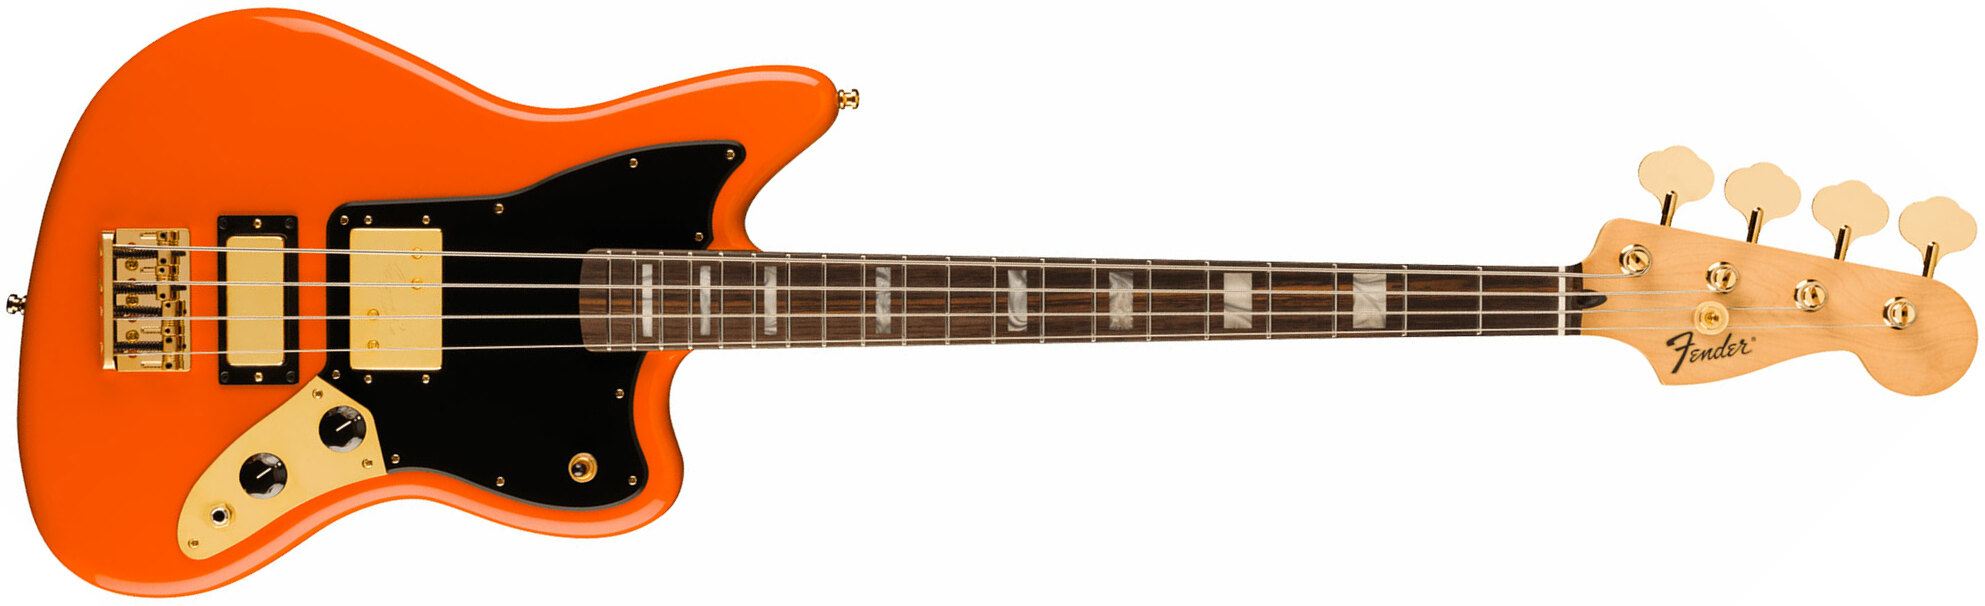 Fender Mike Kerr Jaguar Ltd Mex Signature Rw - Tiger's Blood Orange - Solid body electric bass - Main picture